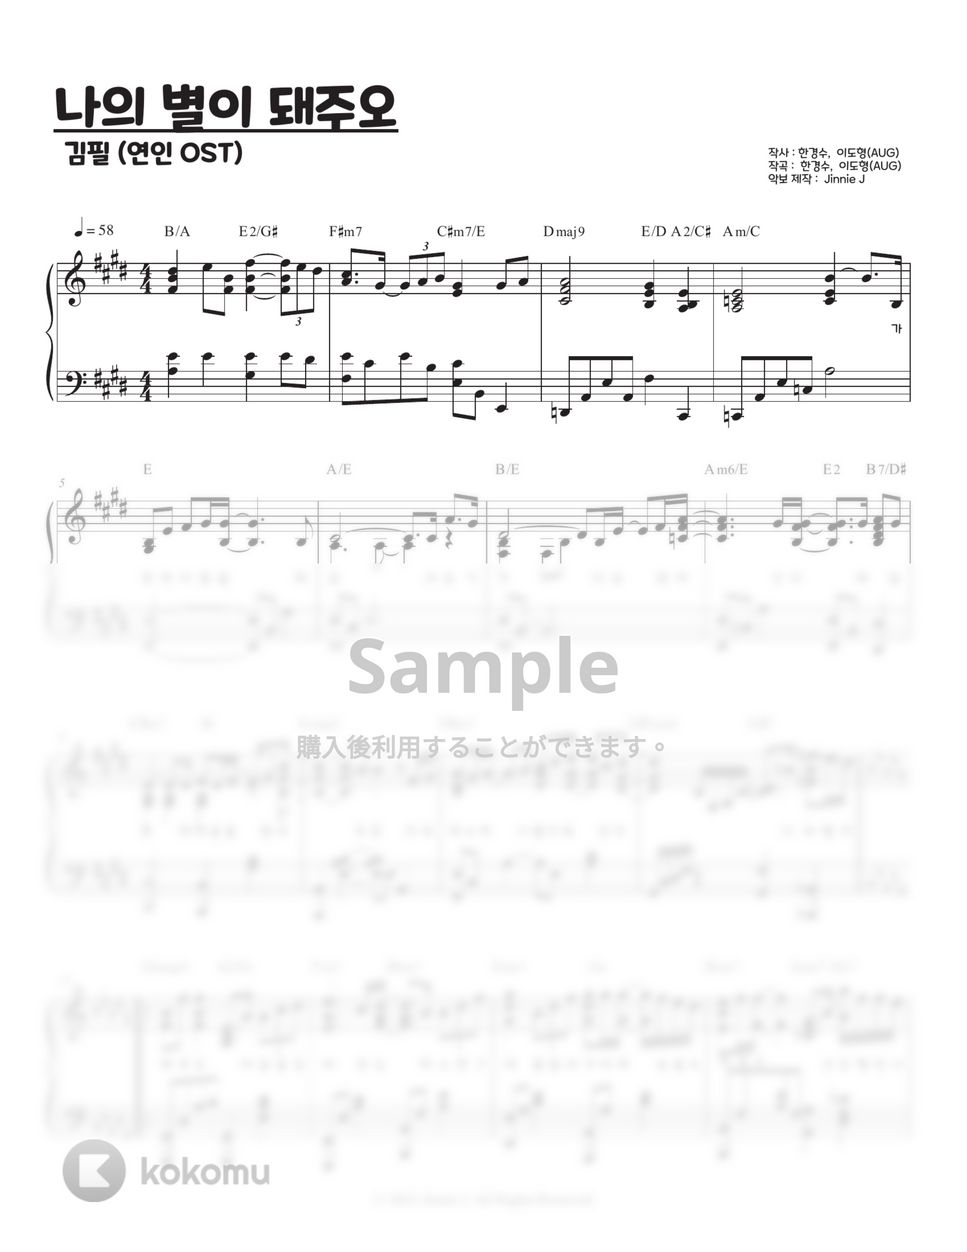 Kim Feel (김필) - My Star (My Dearest OST) (恋人OST) (Original key, Easy key) by Jinnie J